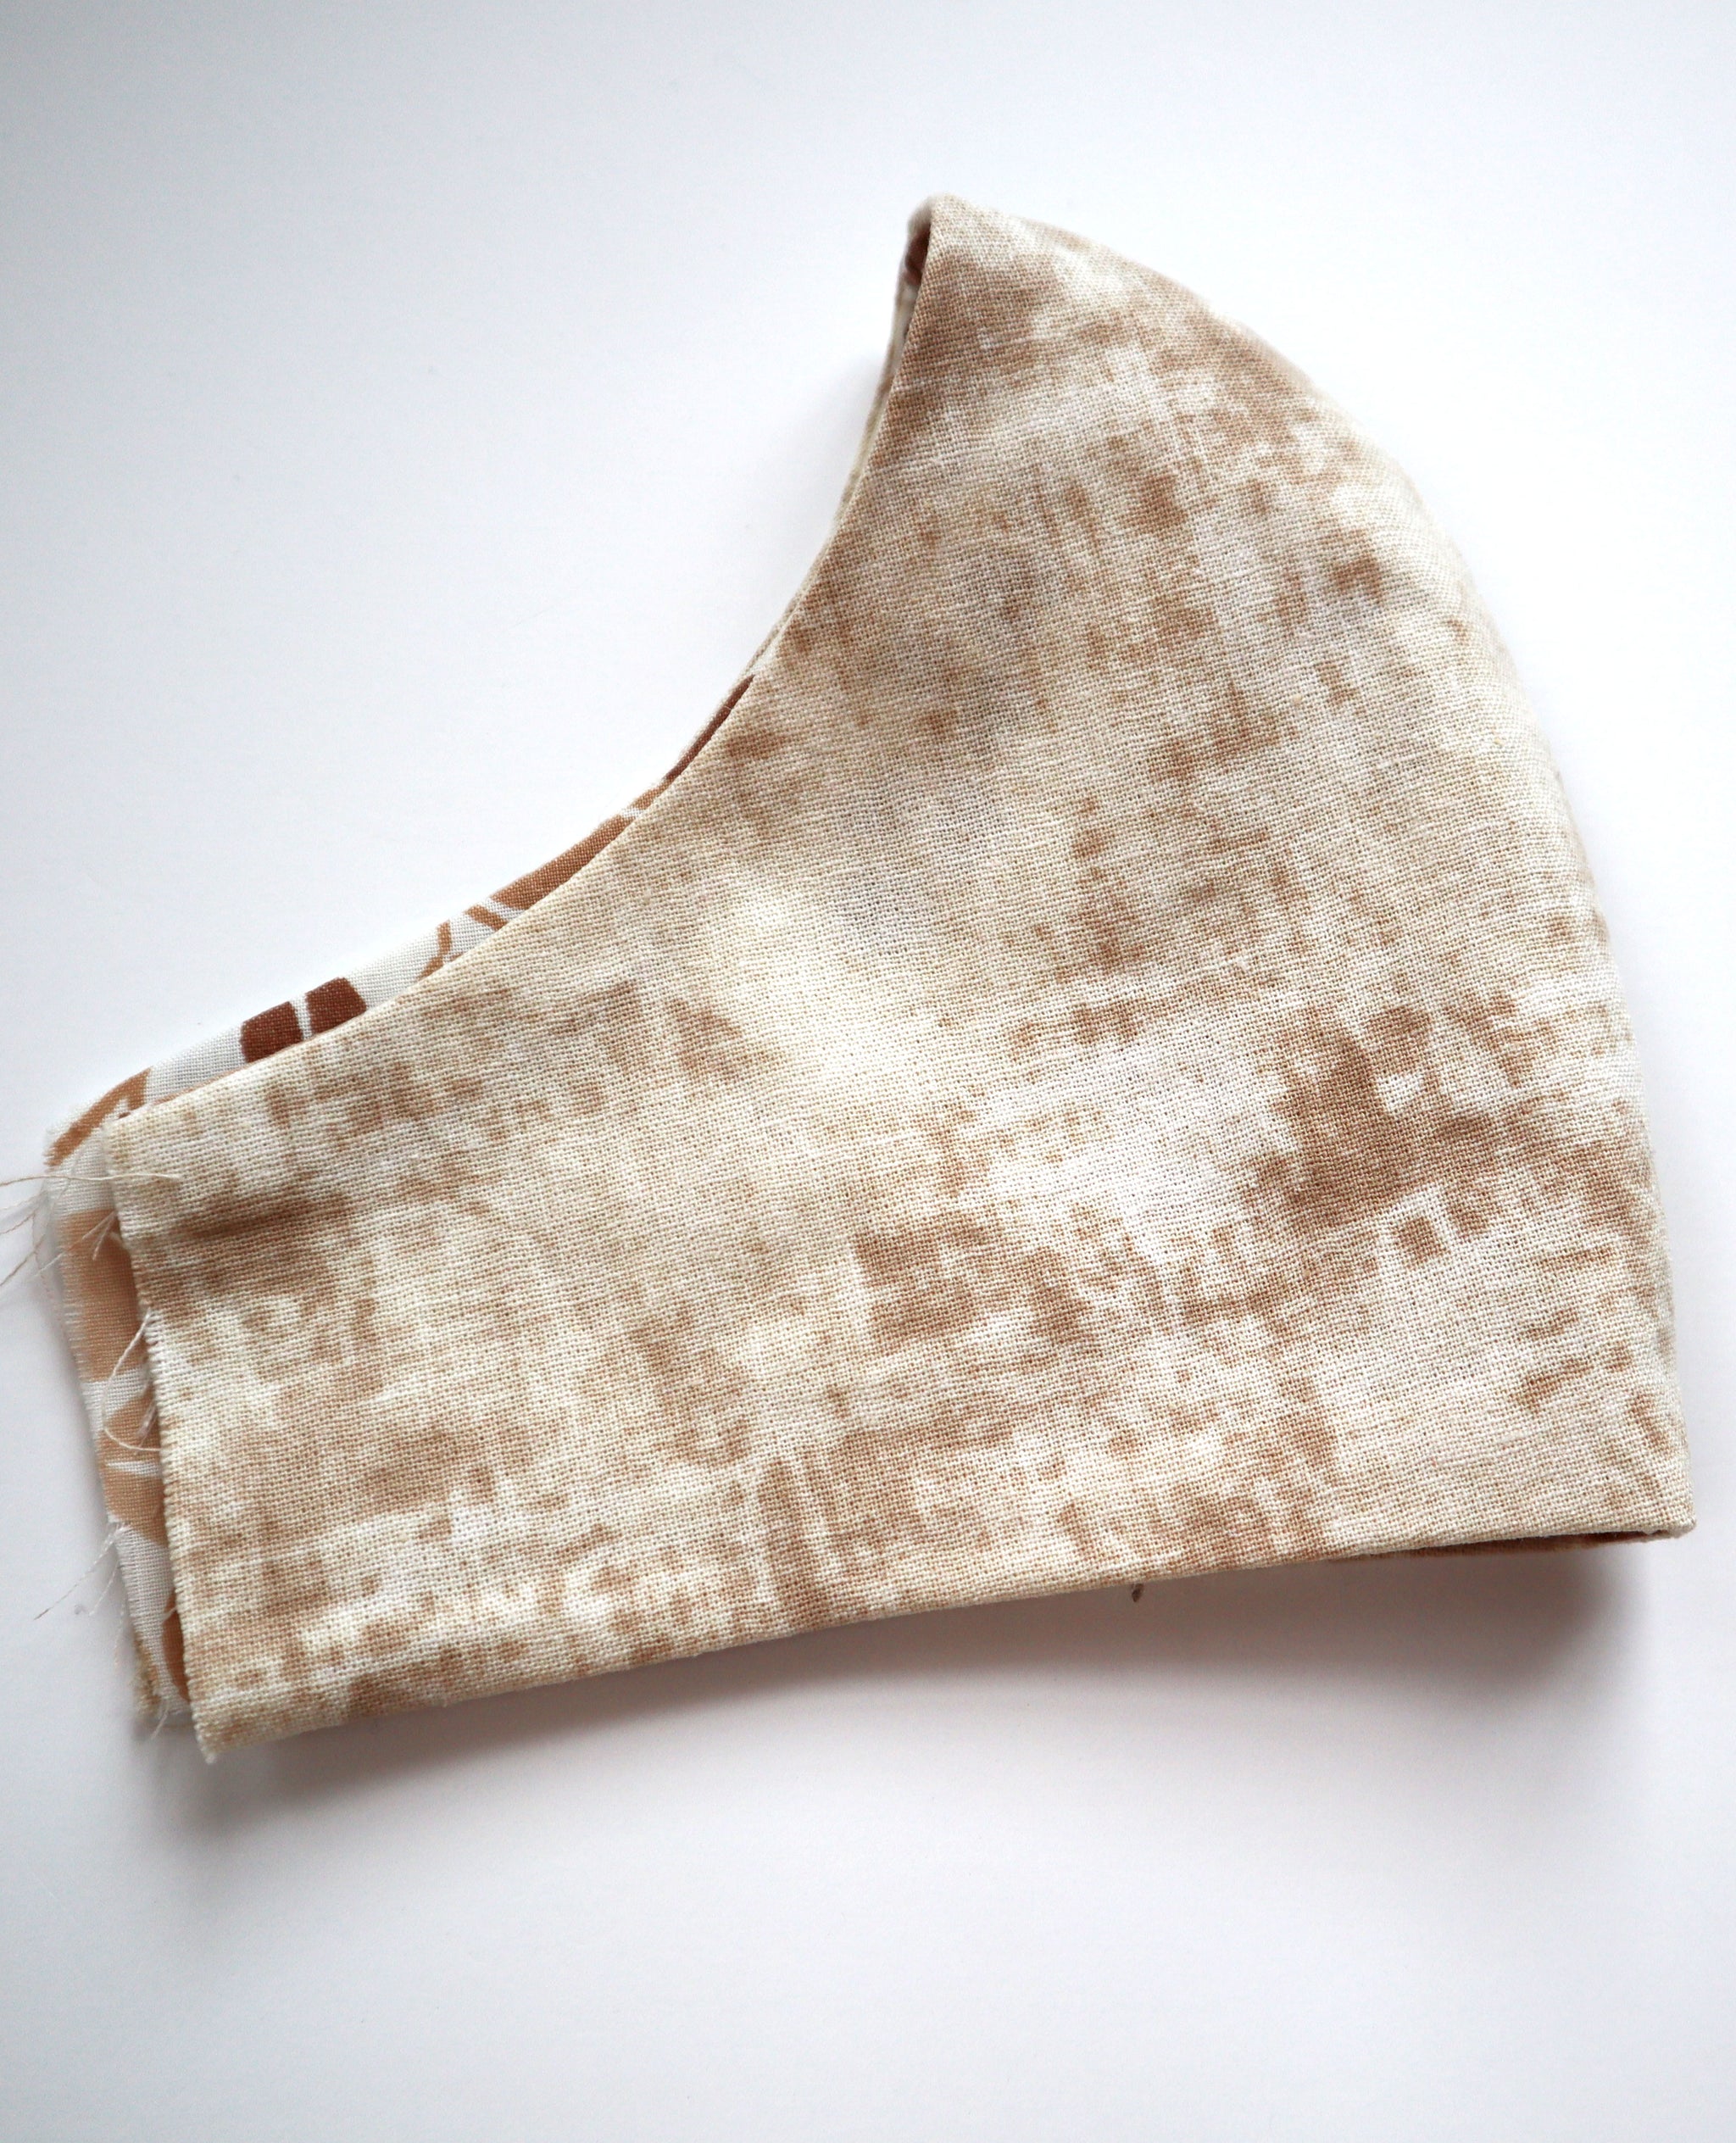 Reversible Natural Leaves 70s Bedding Fabric Mask w/Rhinestone Beading